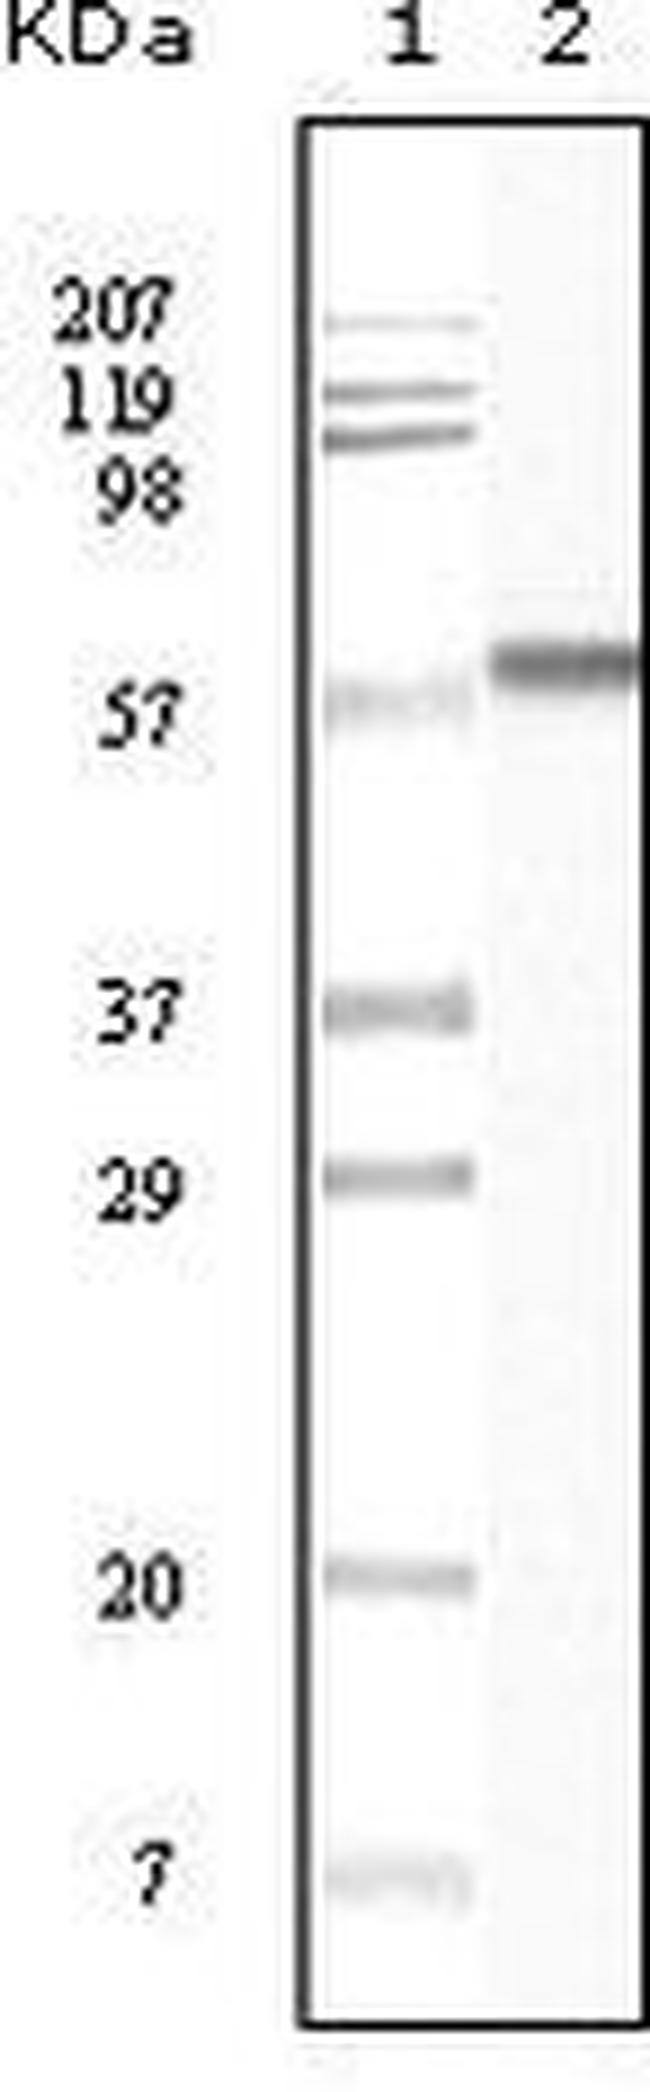 CK1 alpha Antibody in Western Blot (WB)